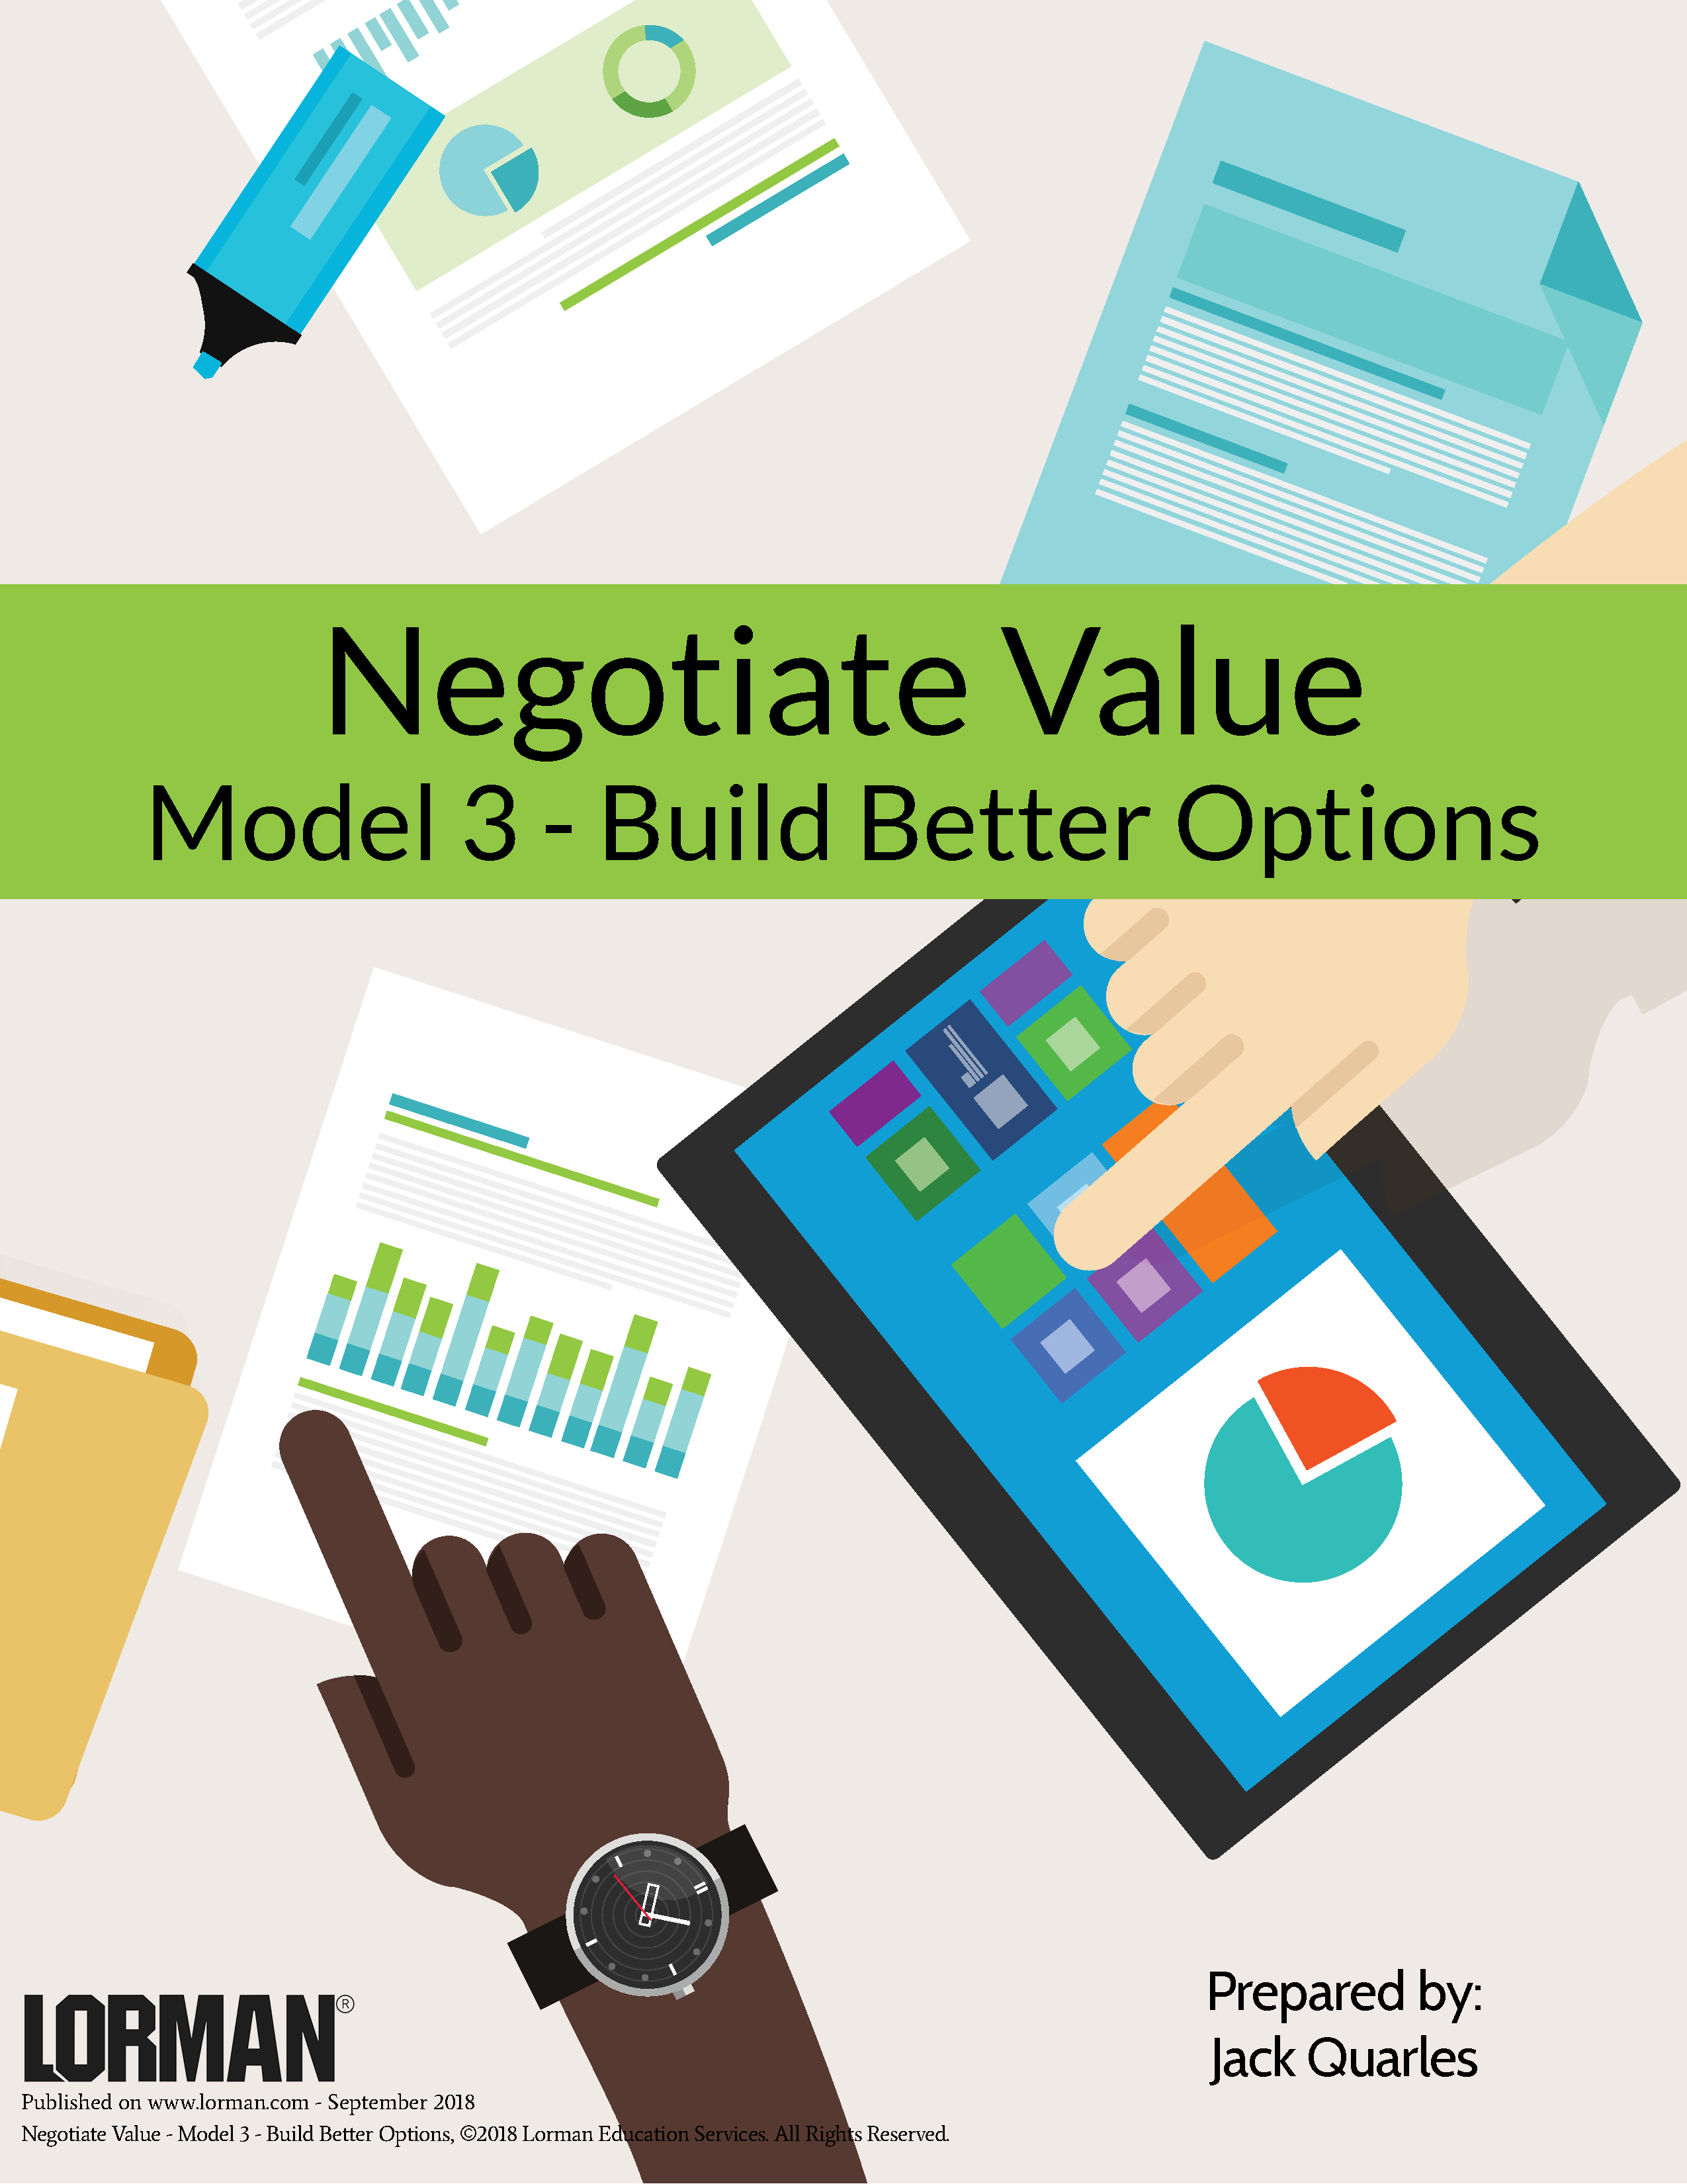 Negotiate Value - Model 3 - Build Better Options